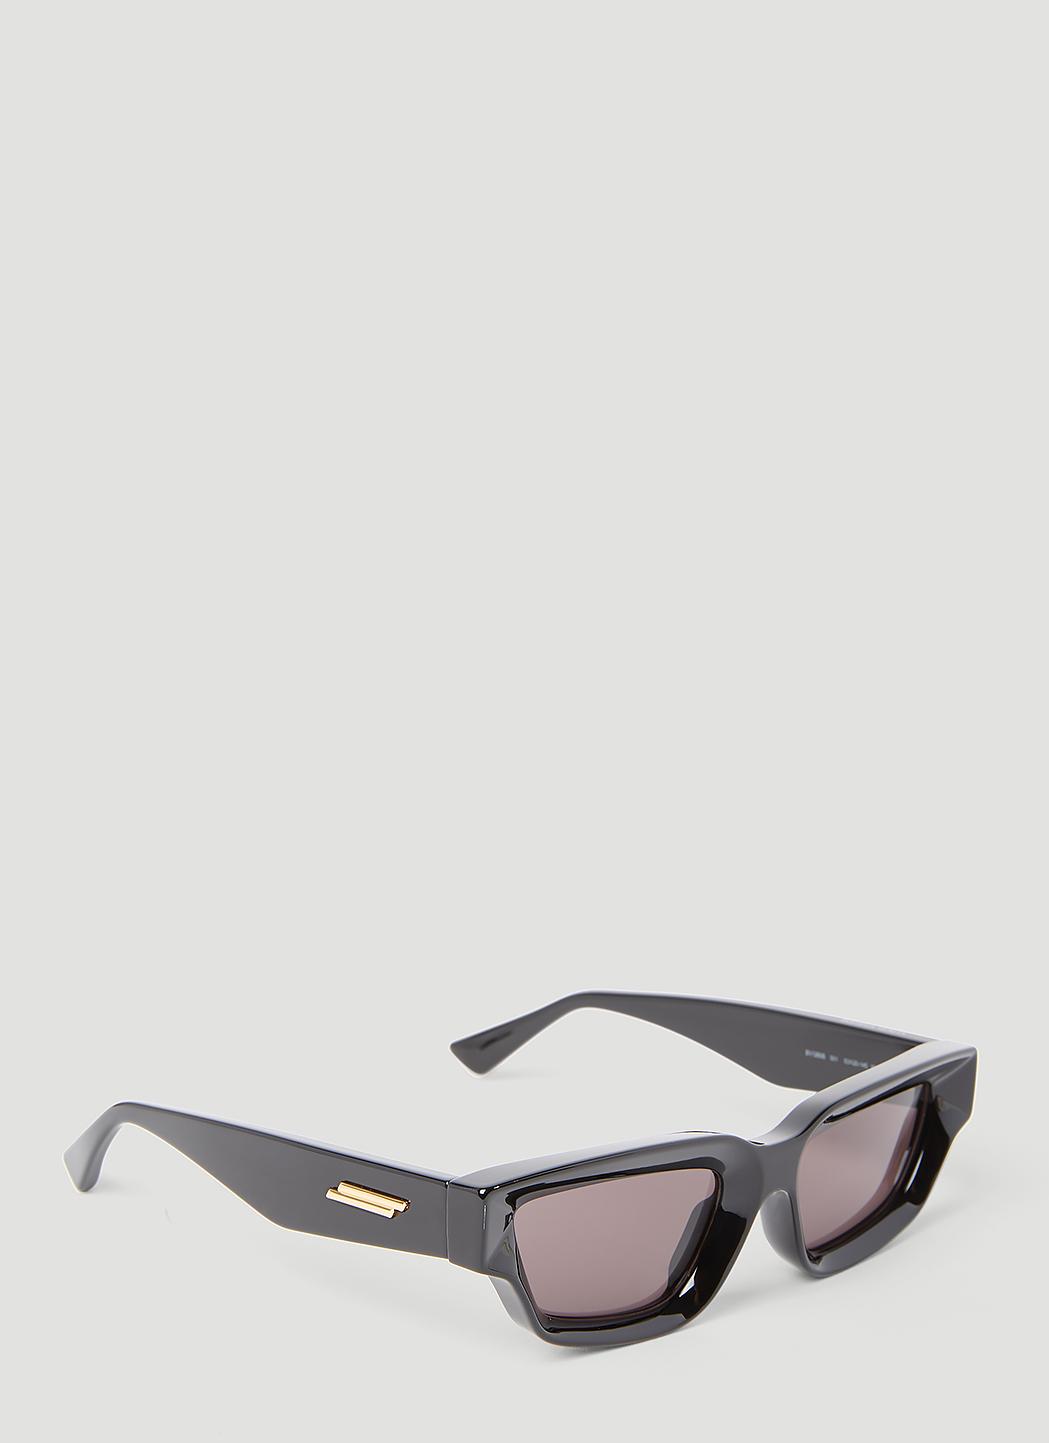 Bottega Veneta Sharp Square Sunglasses in Gray | Lyst